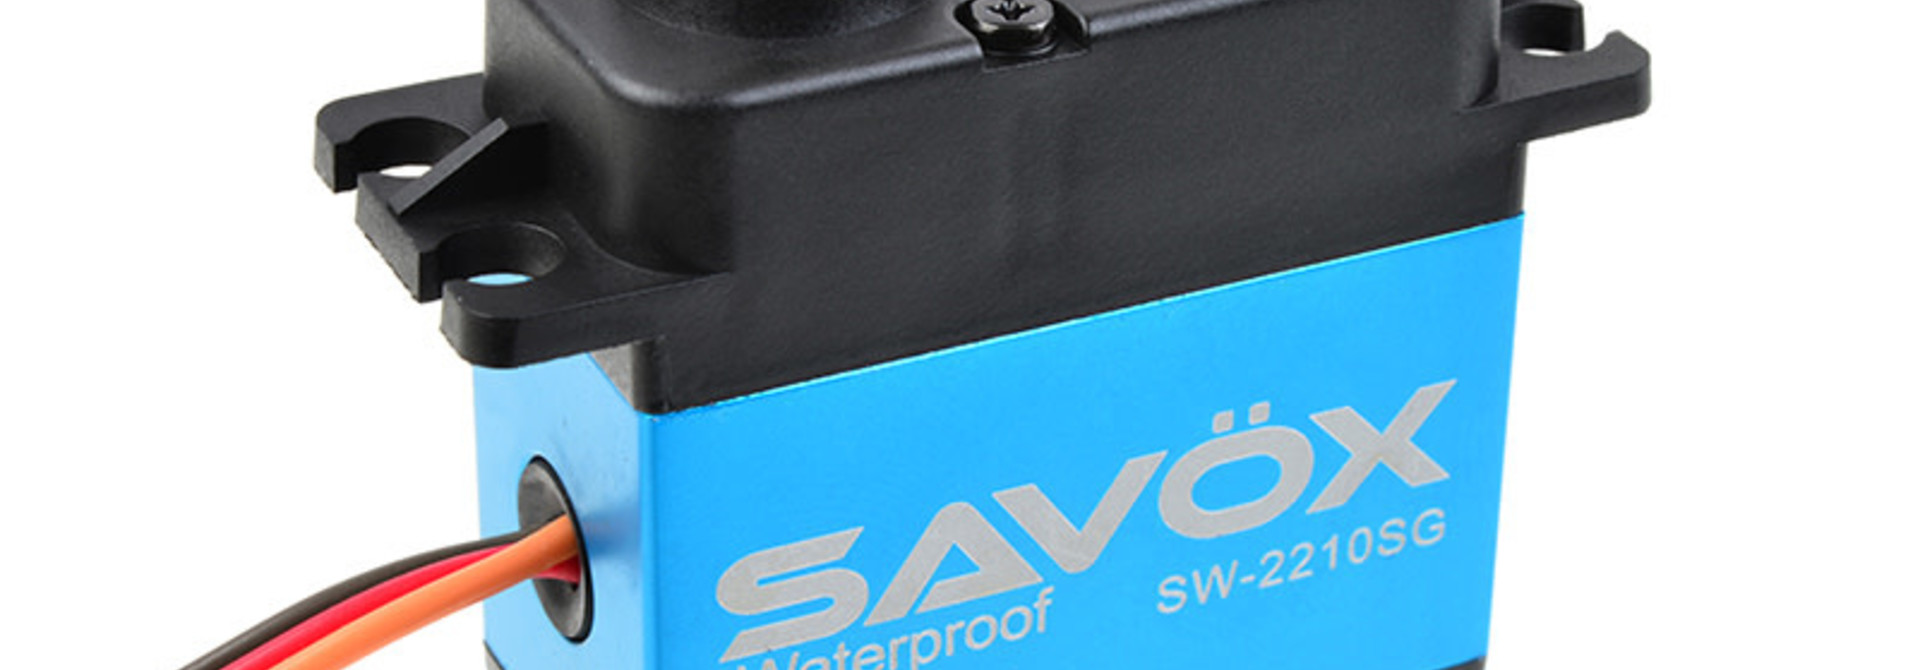 Savox - Servo - SW-2210SG - Digital - High Voltage - Brushless Motor - Waterproof - Steel Gear